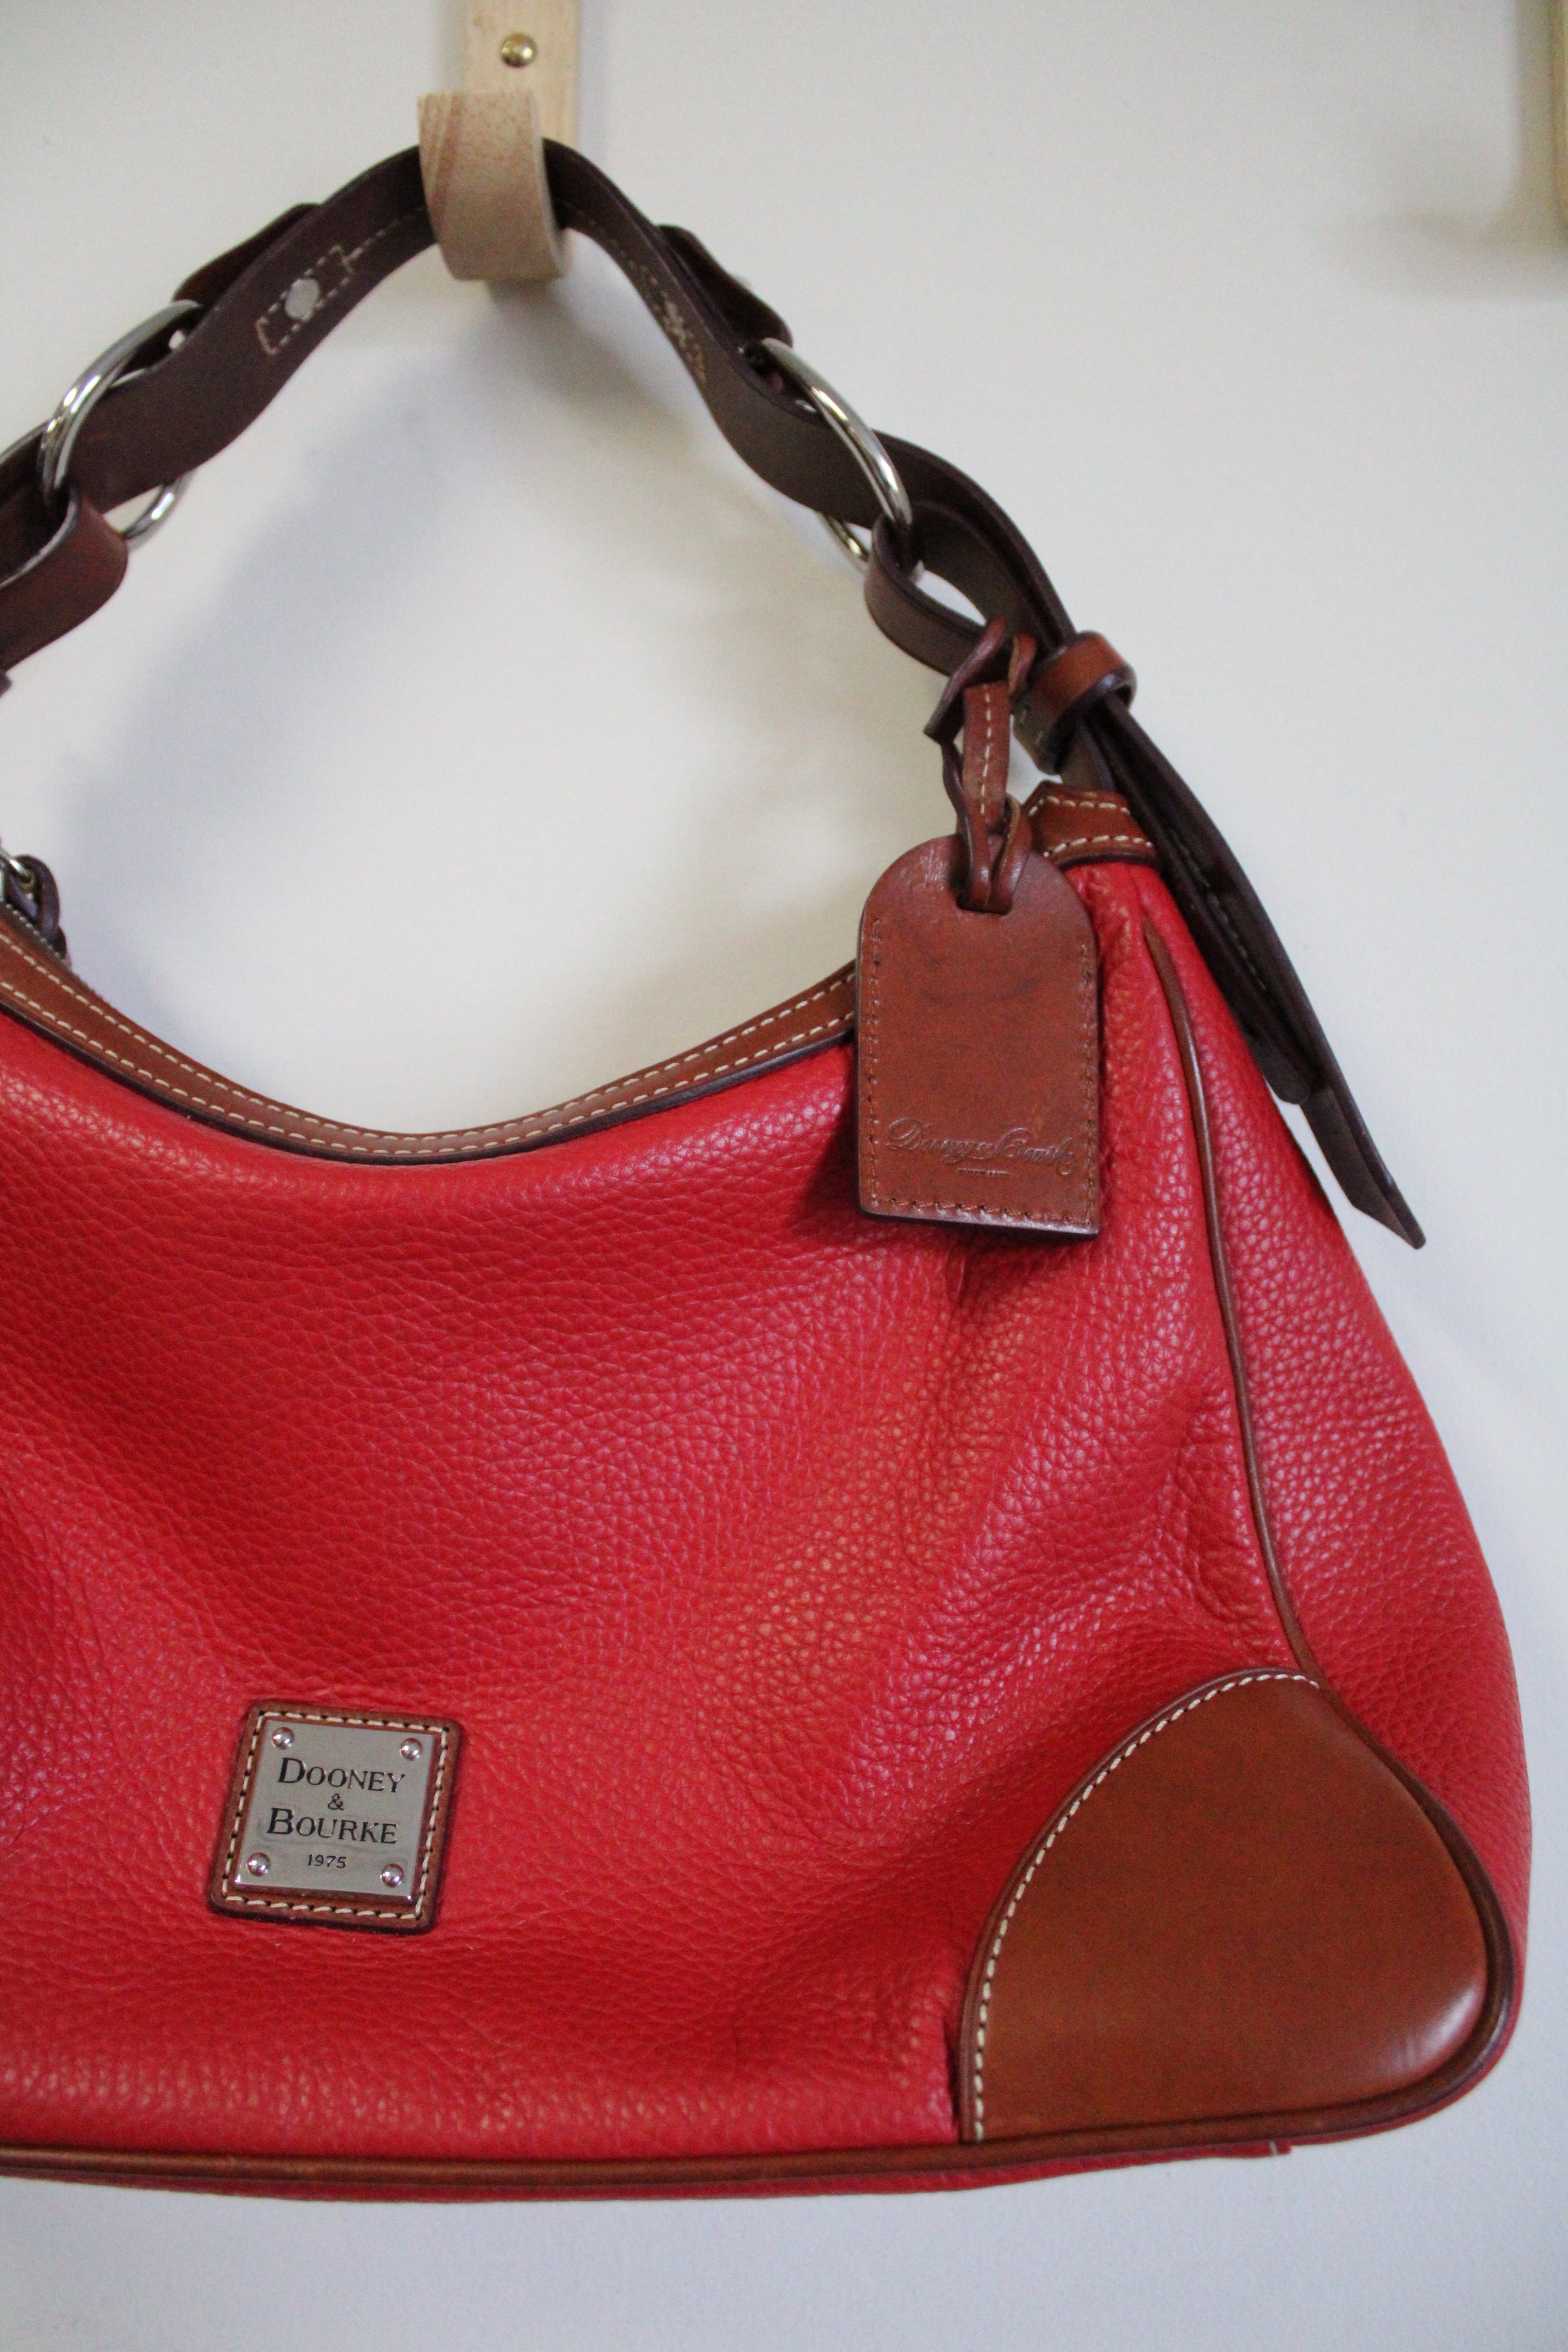 Dooney & Bourke Red Leather Hobo Bag Purse